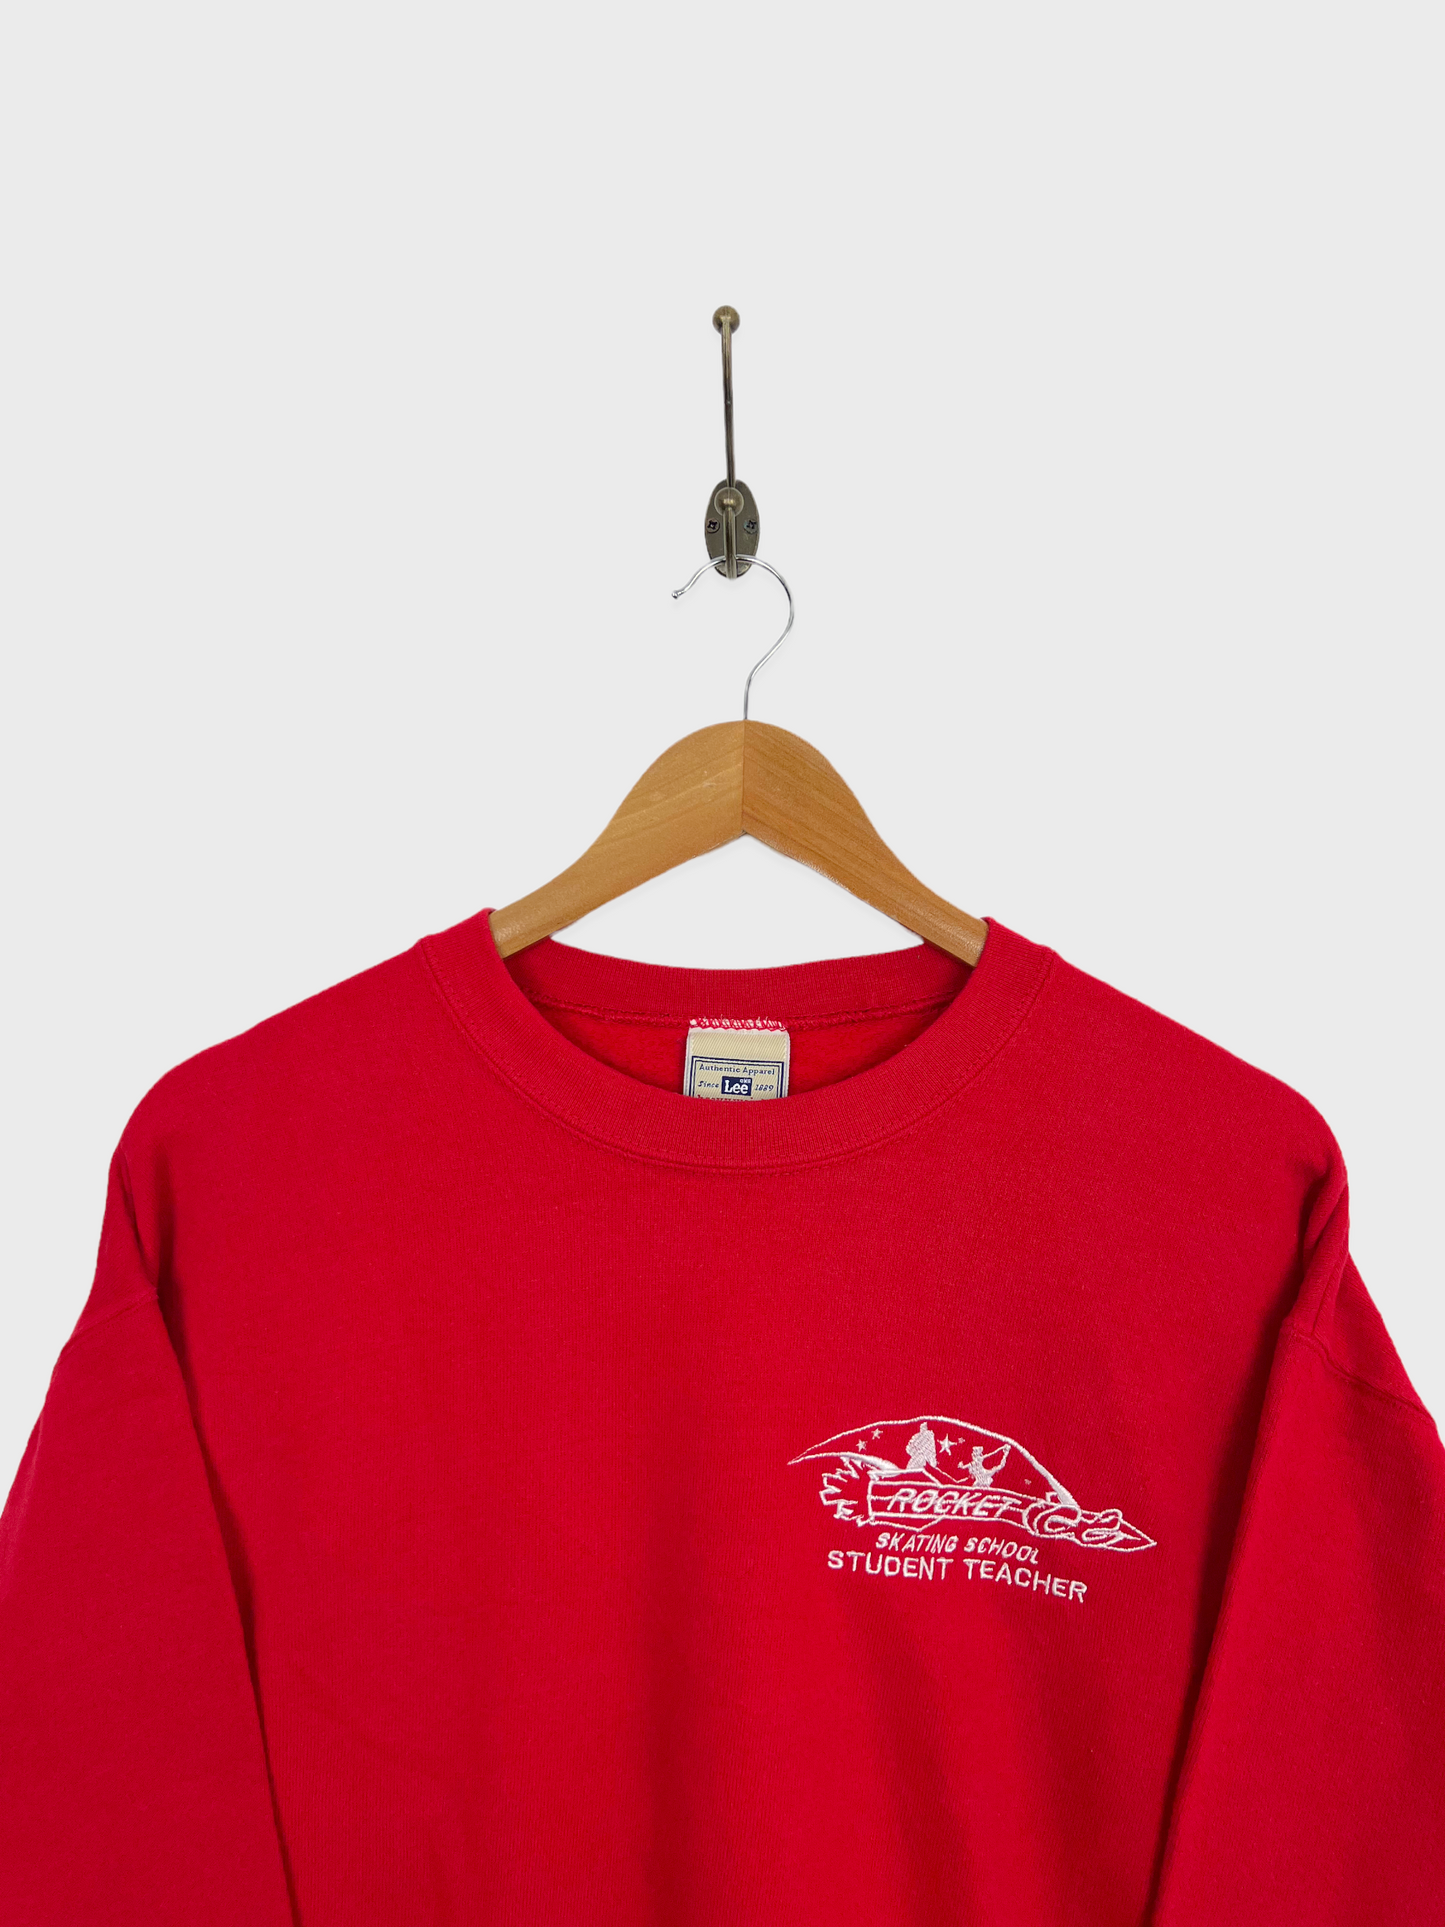 90's Skating School Embroidered Vintage Sweatshirt Size 10-12